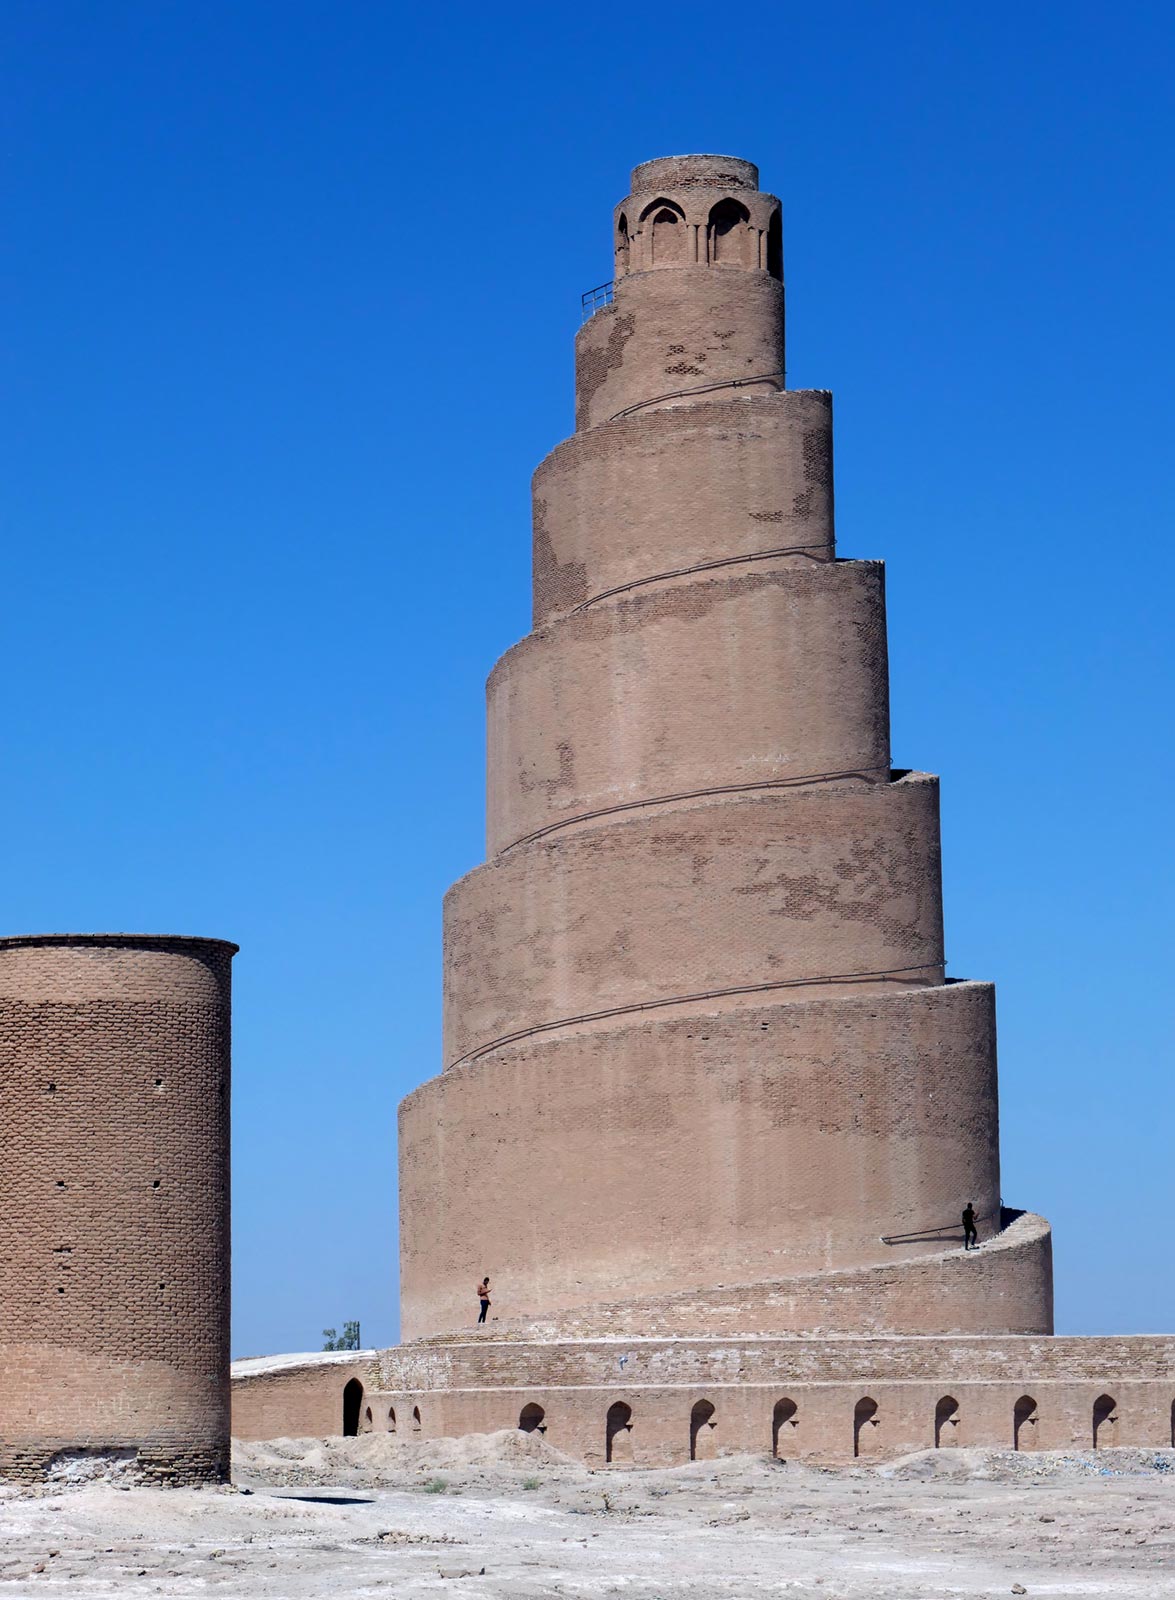 Minaret of the Grand Mosque of Samarra